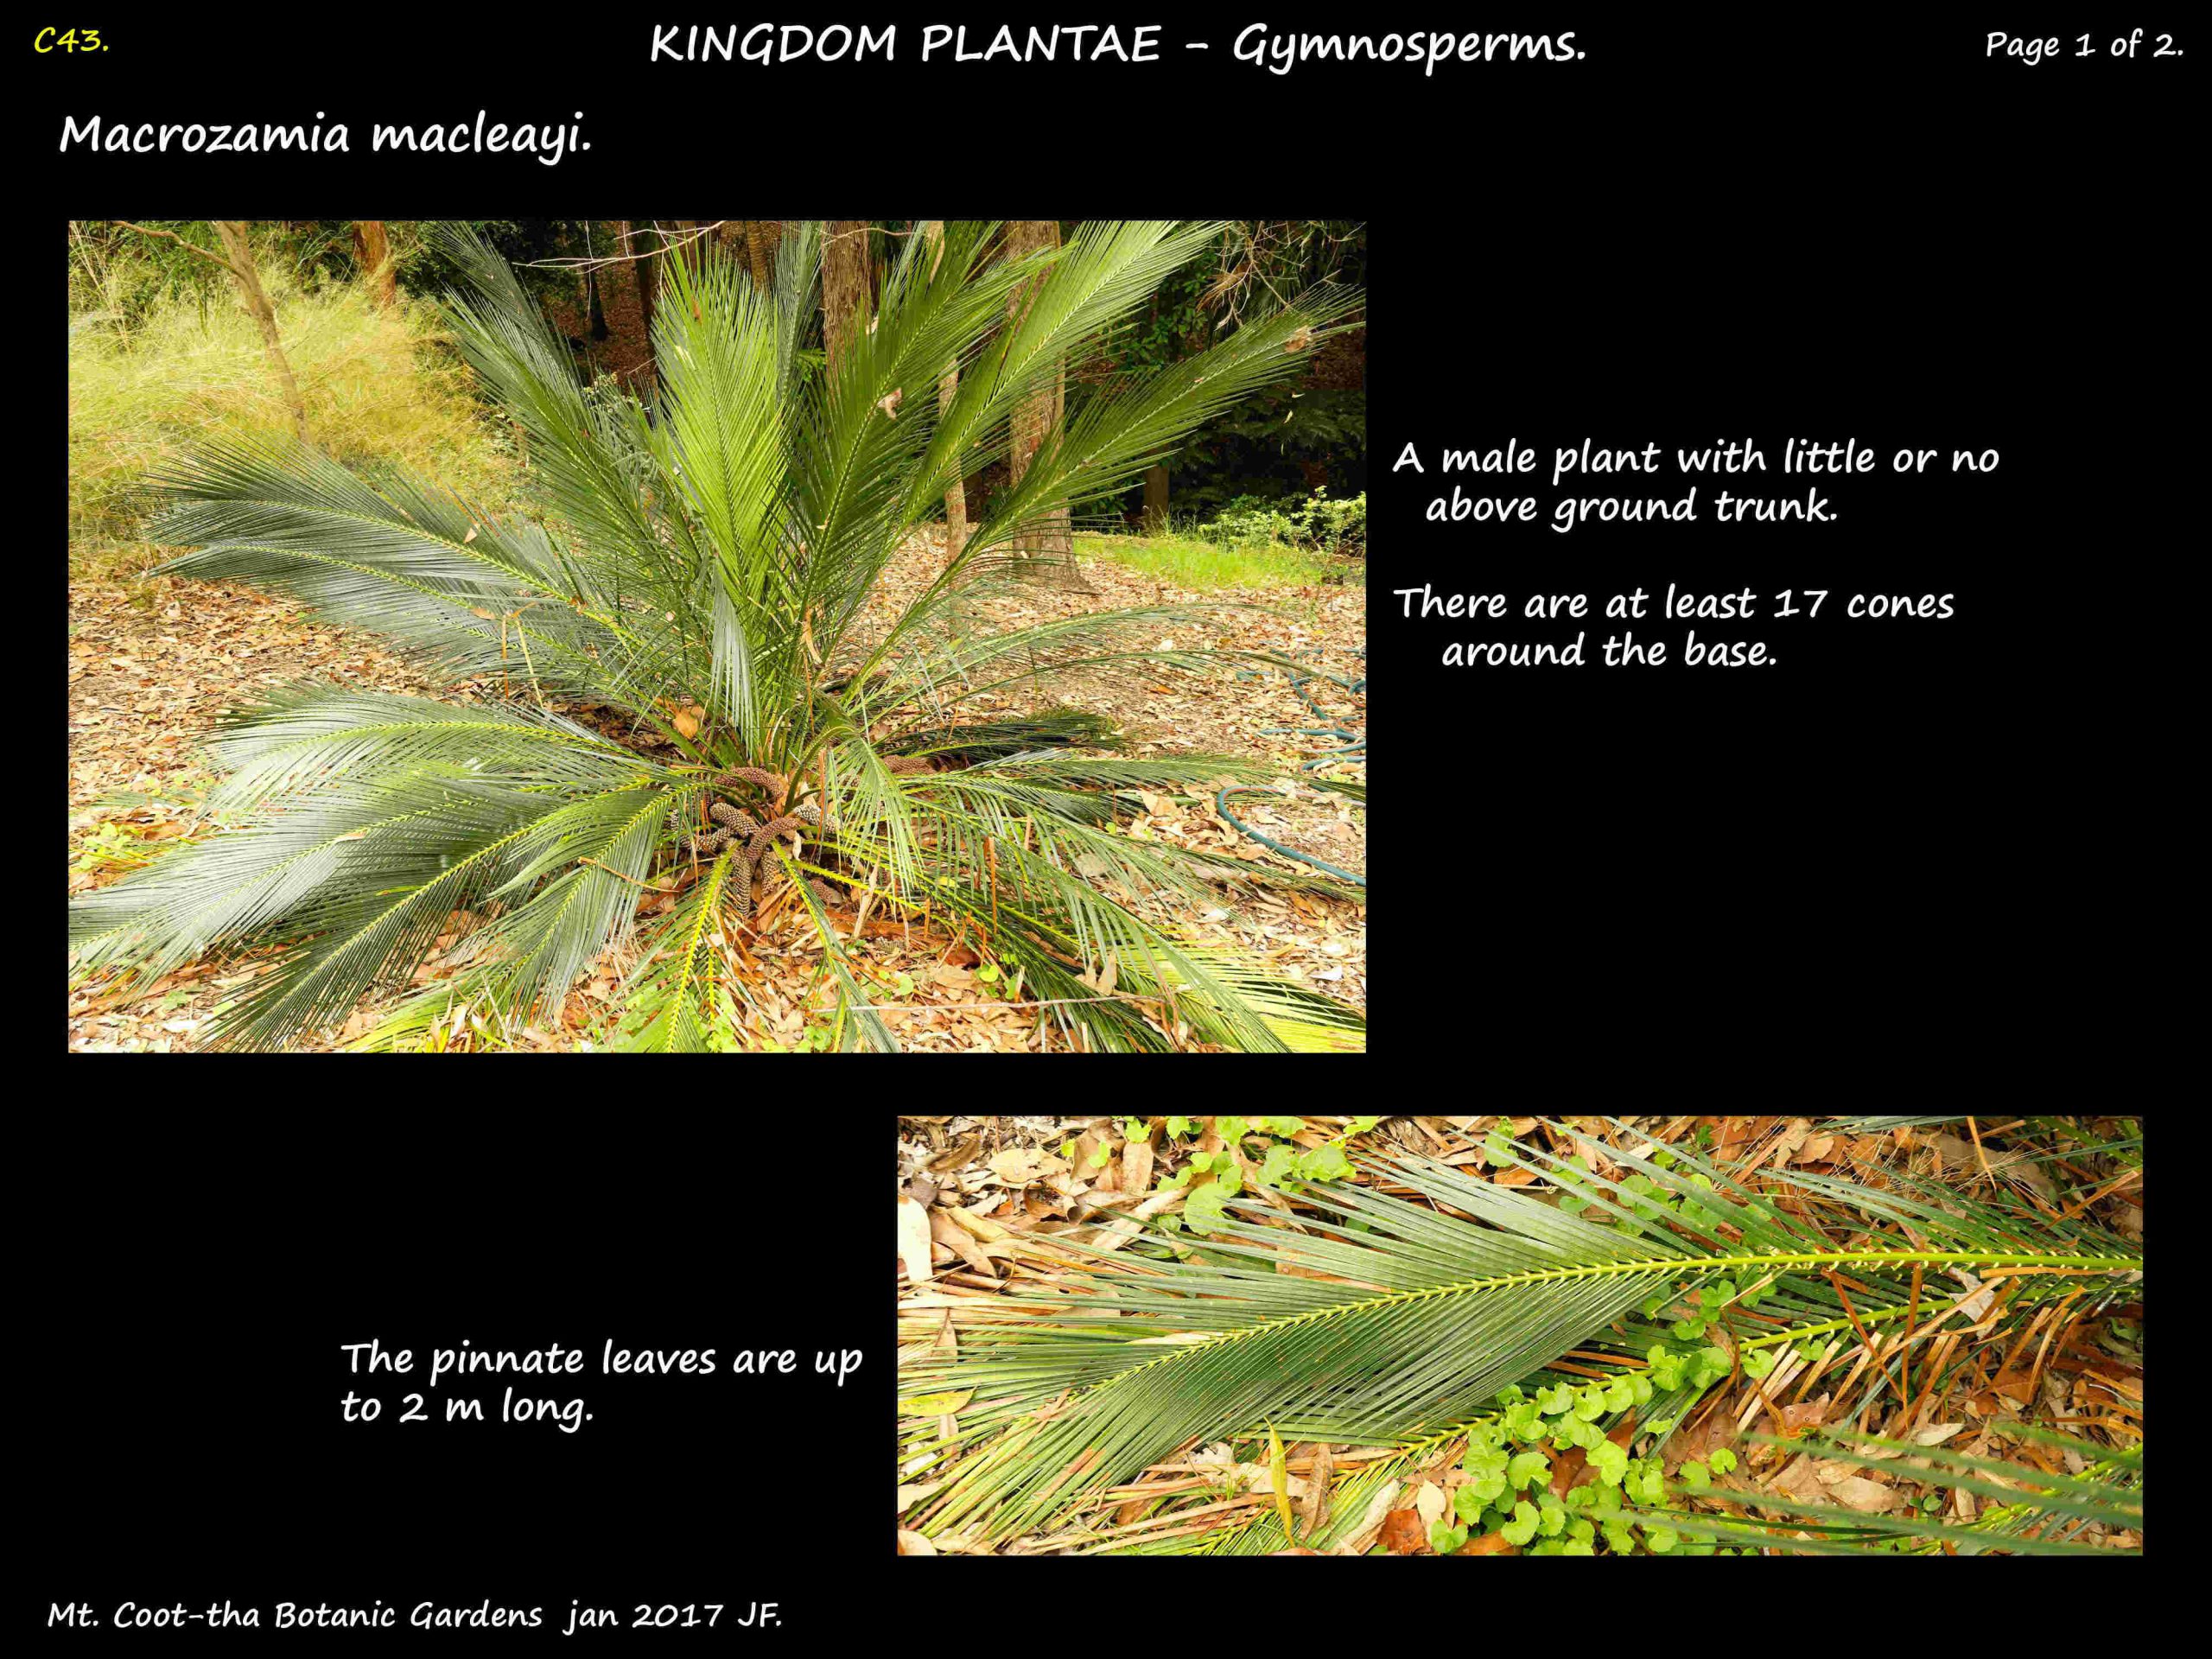 1 Macrozamia macleayi plant